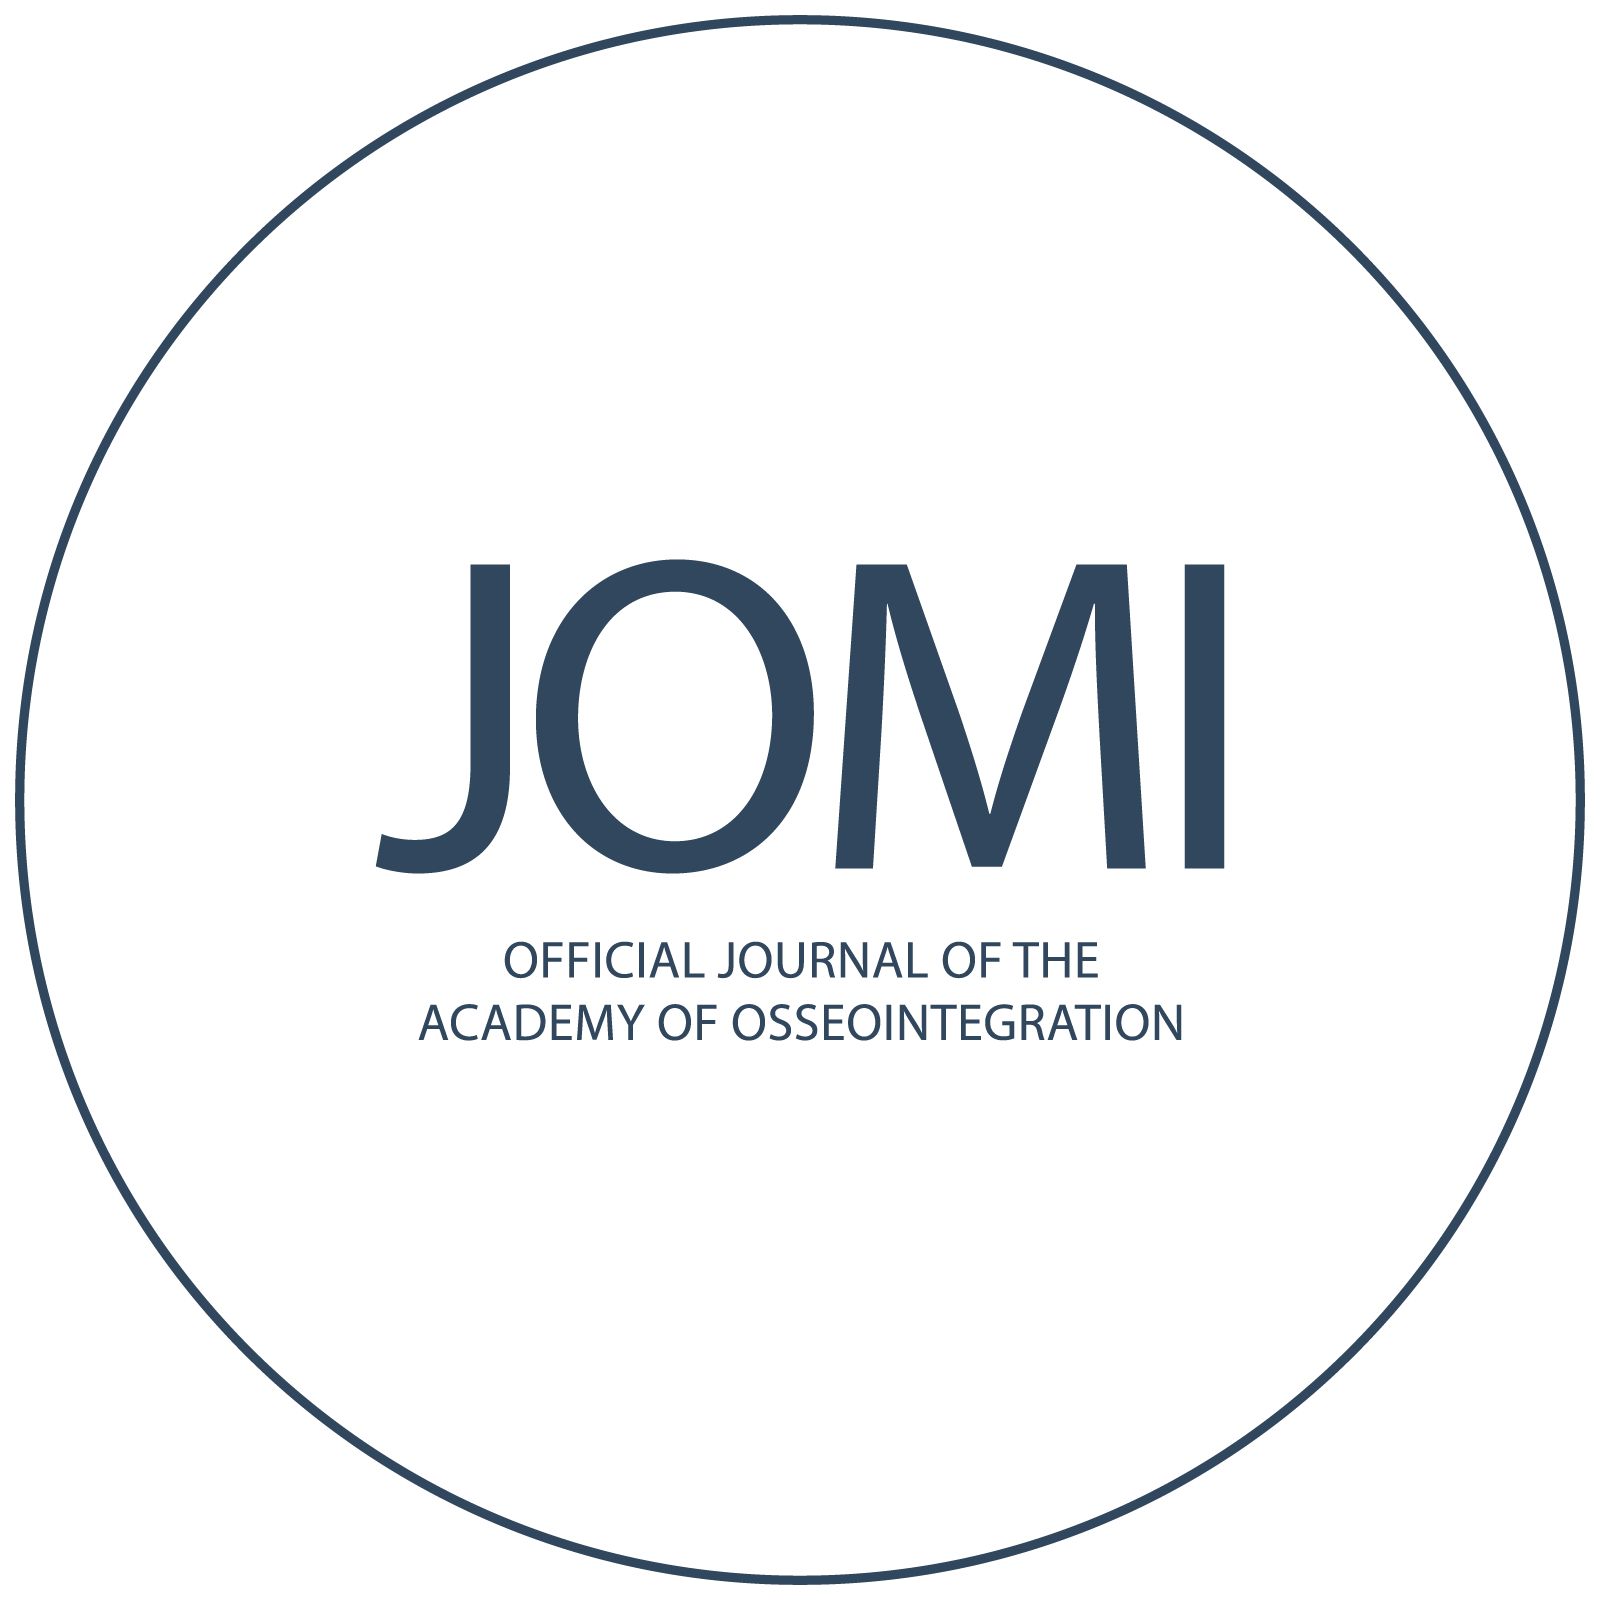 JOMI: Official Journal of the Academy of Osseointegration logo